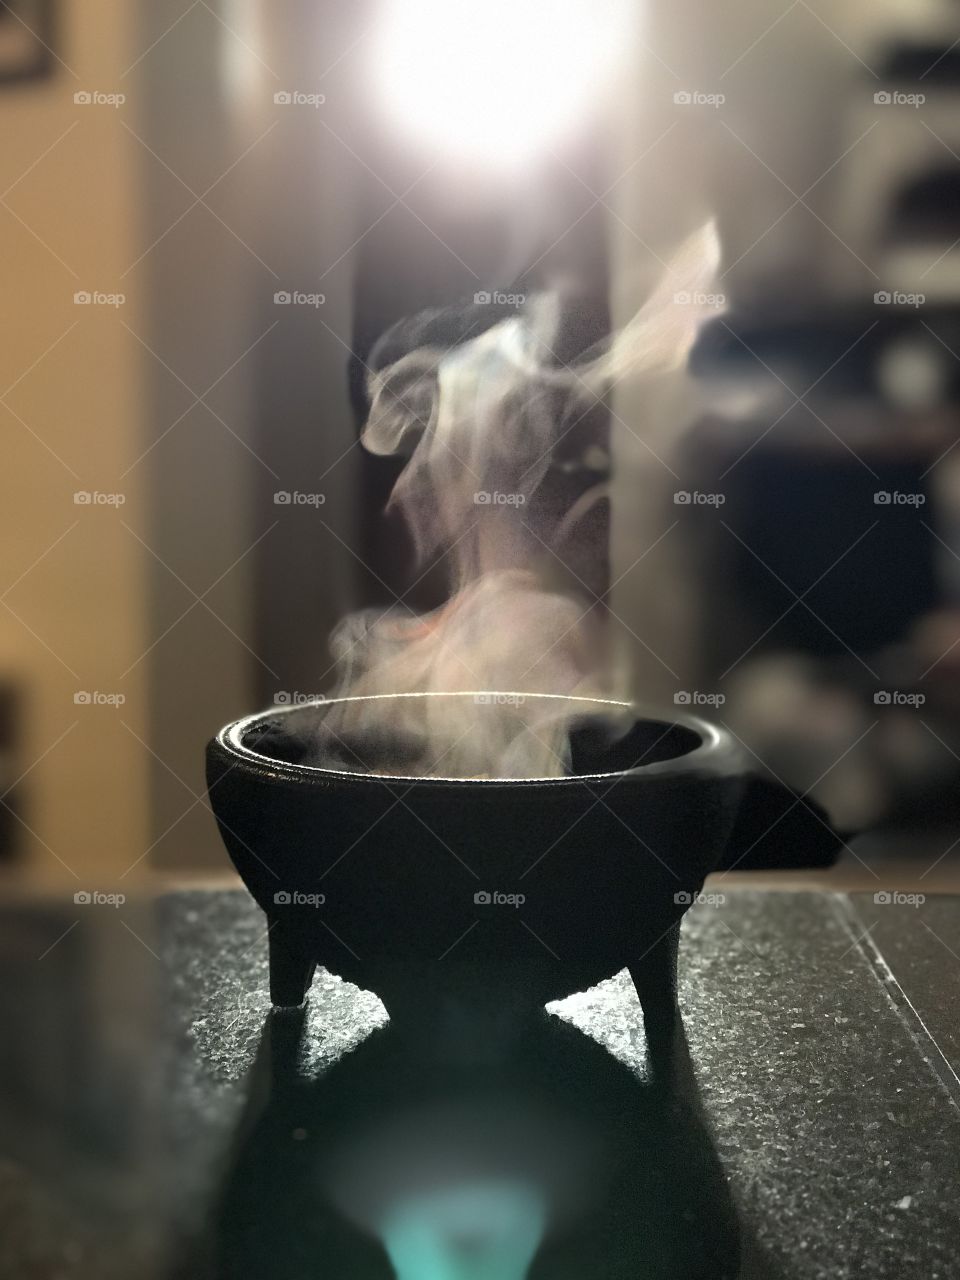 Steaming bowl